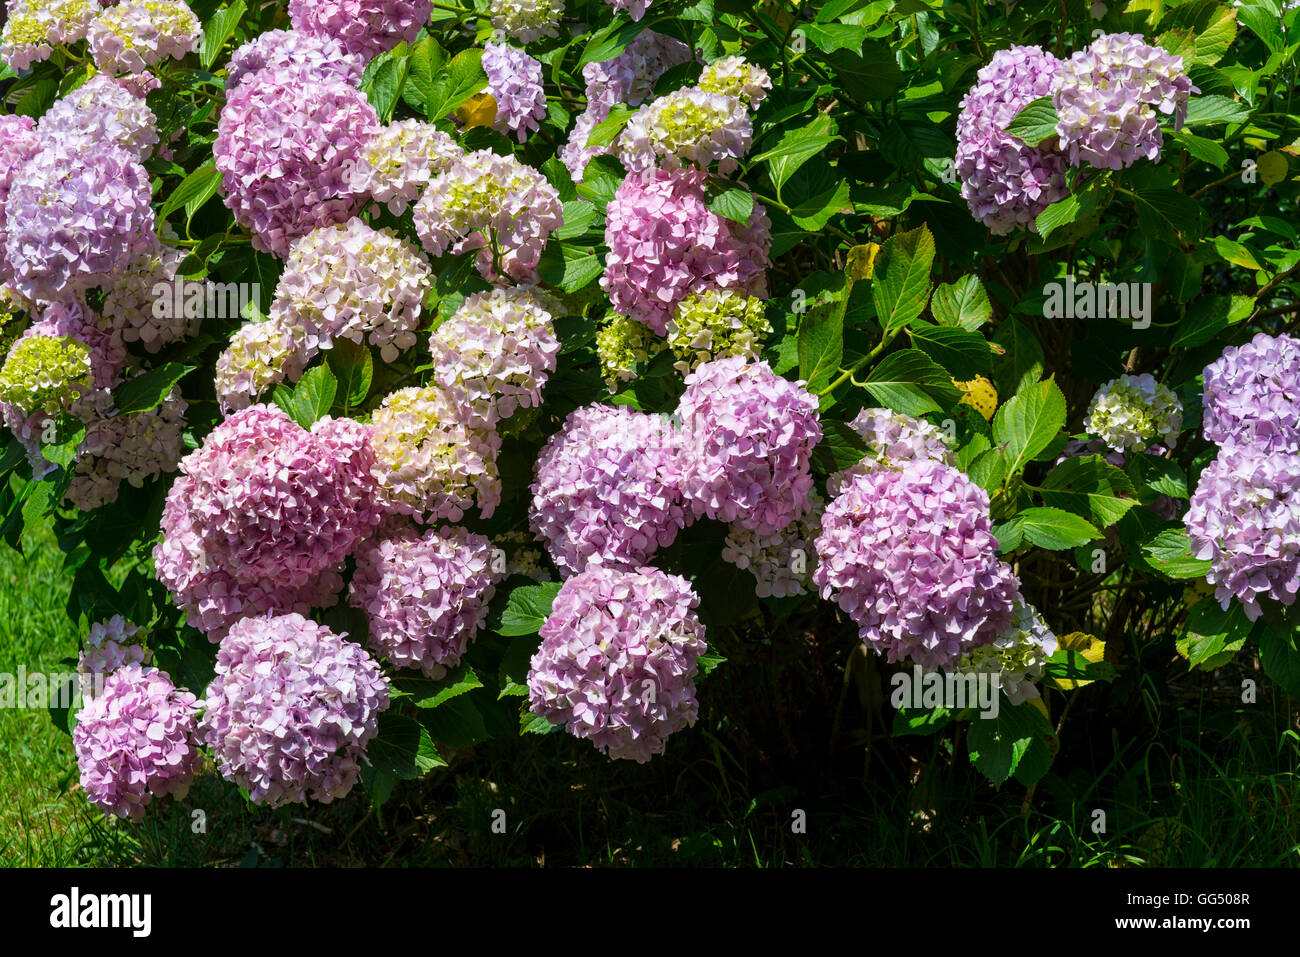 Hydrangea shrub in full bloom Stock Photo